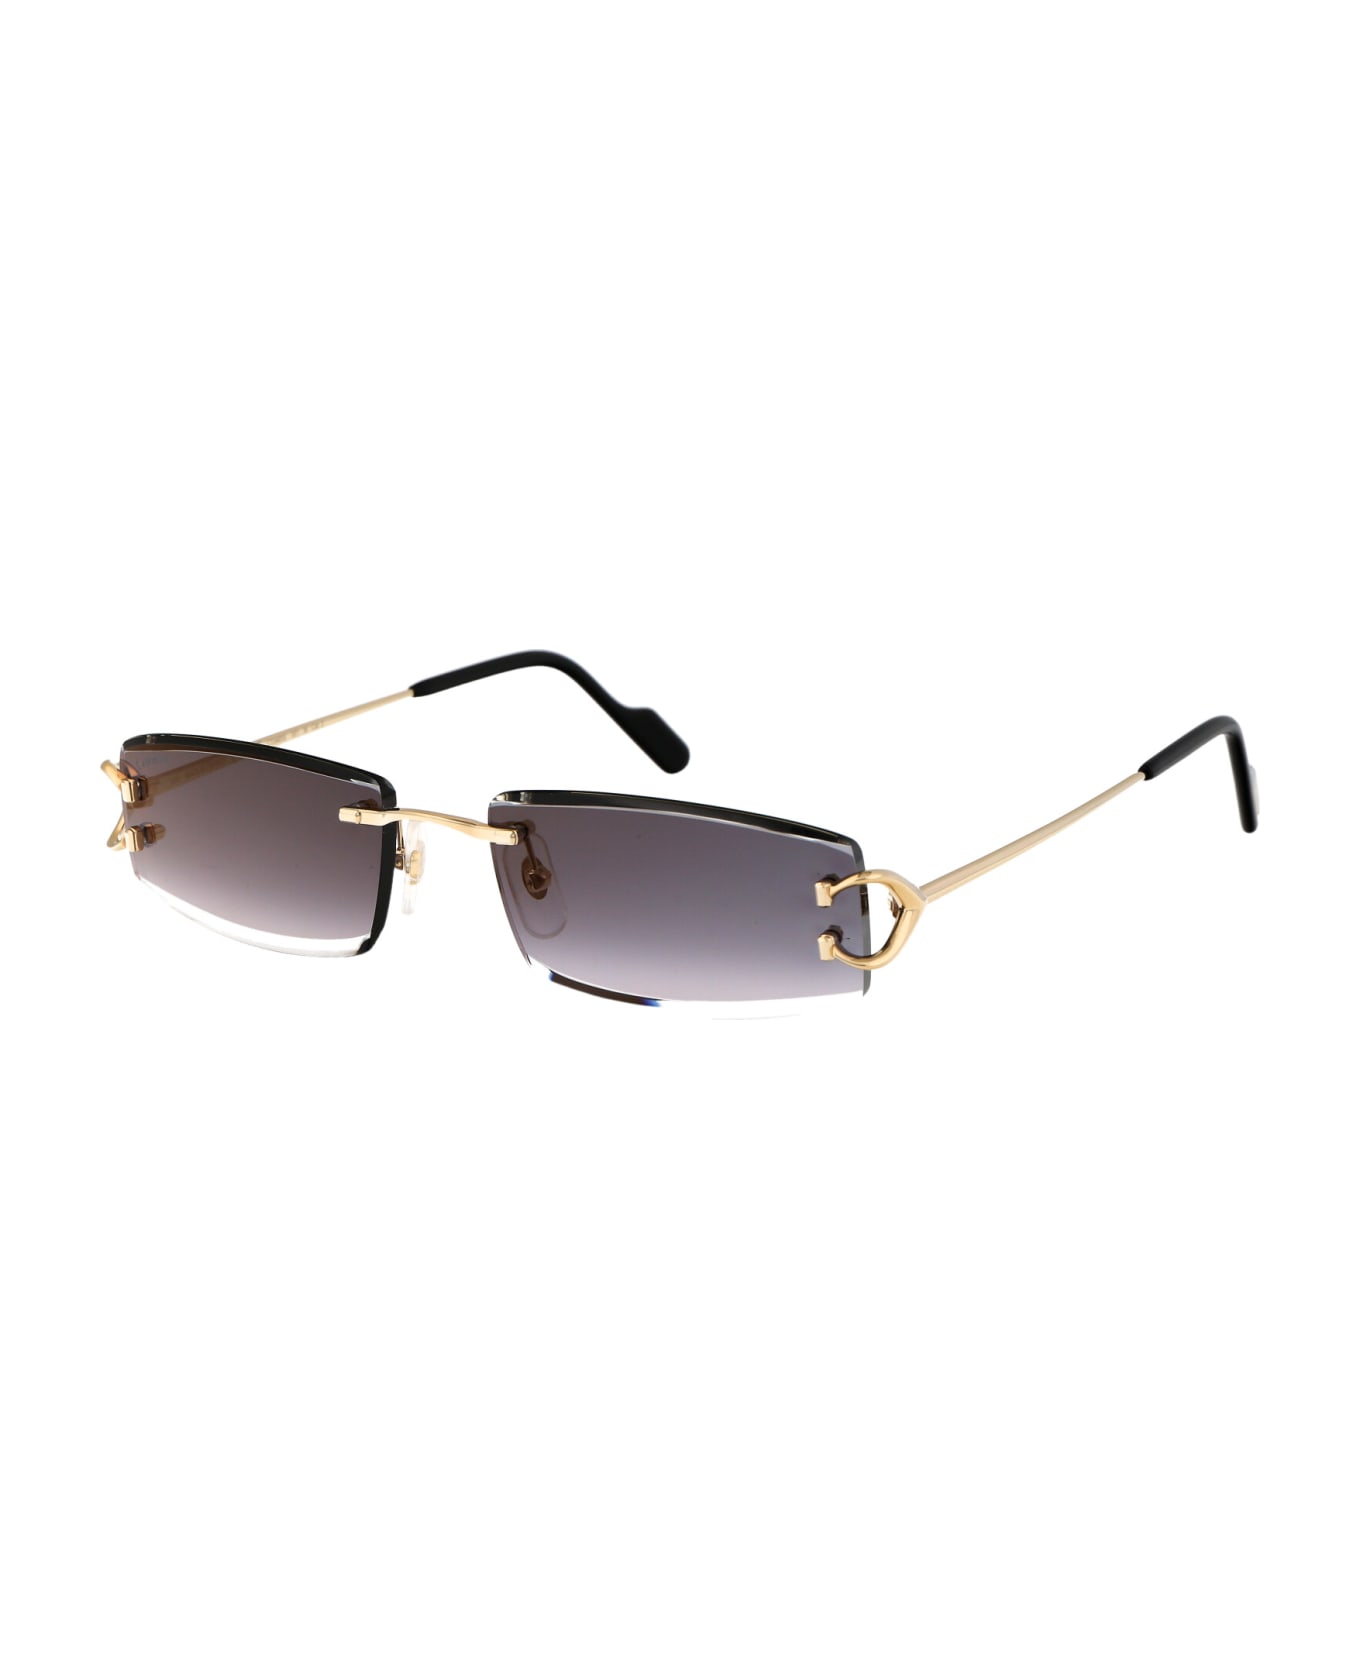 Cartier Eyewear Ct0465s Sunglasses - 001 GOLD GOLD GREY